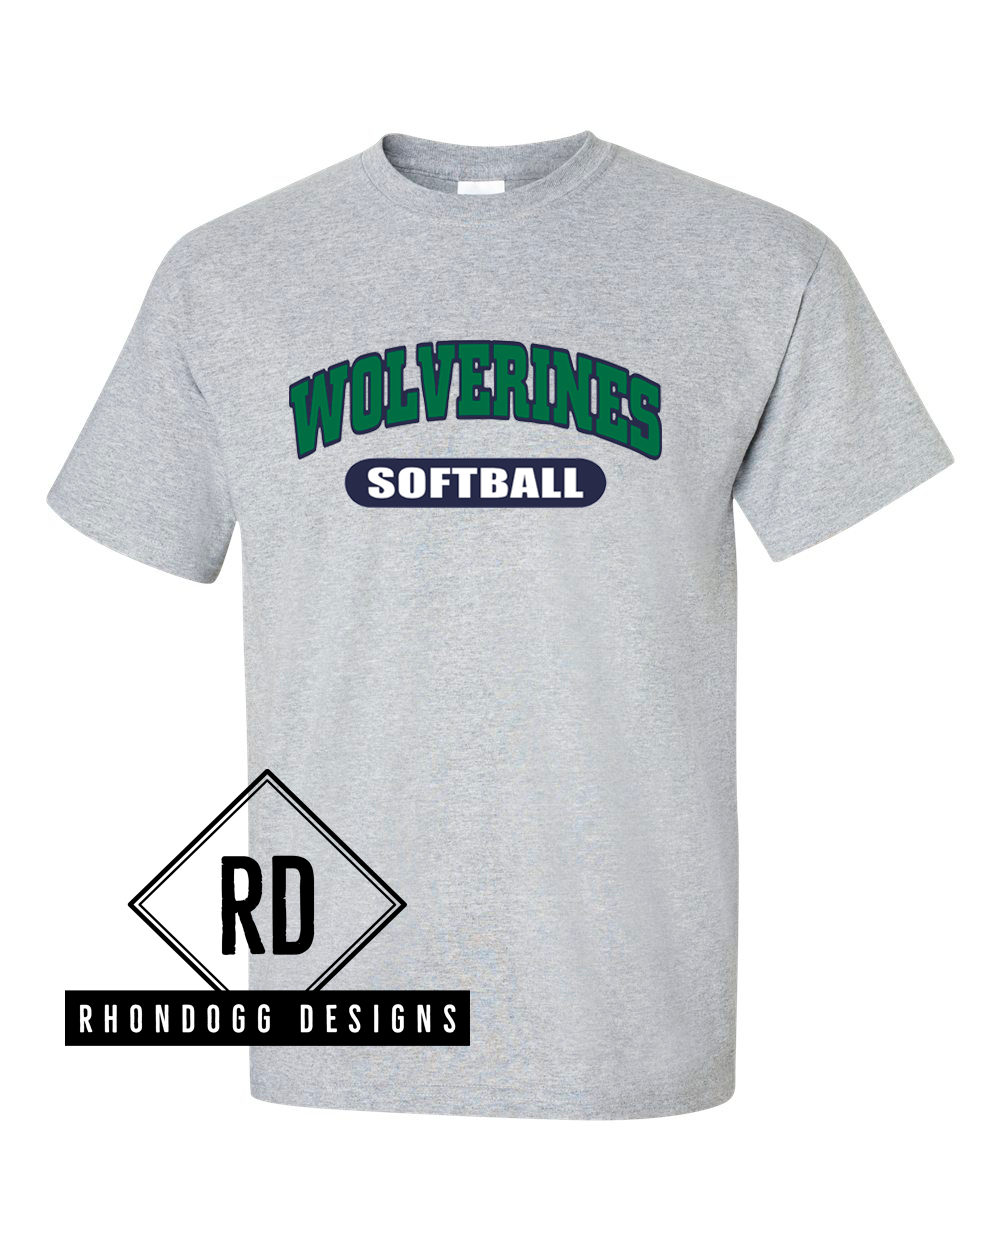 Woodgrove High School Softball Short Sleeve Shirt